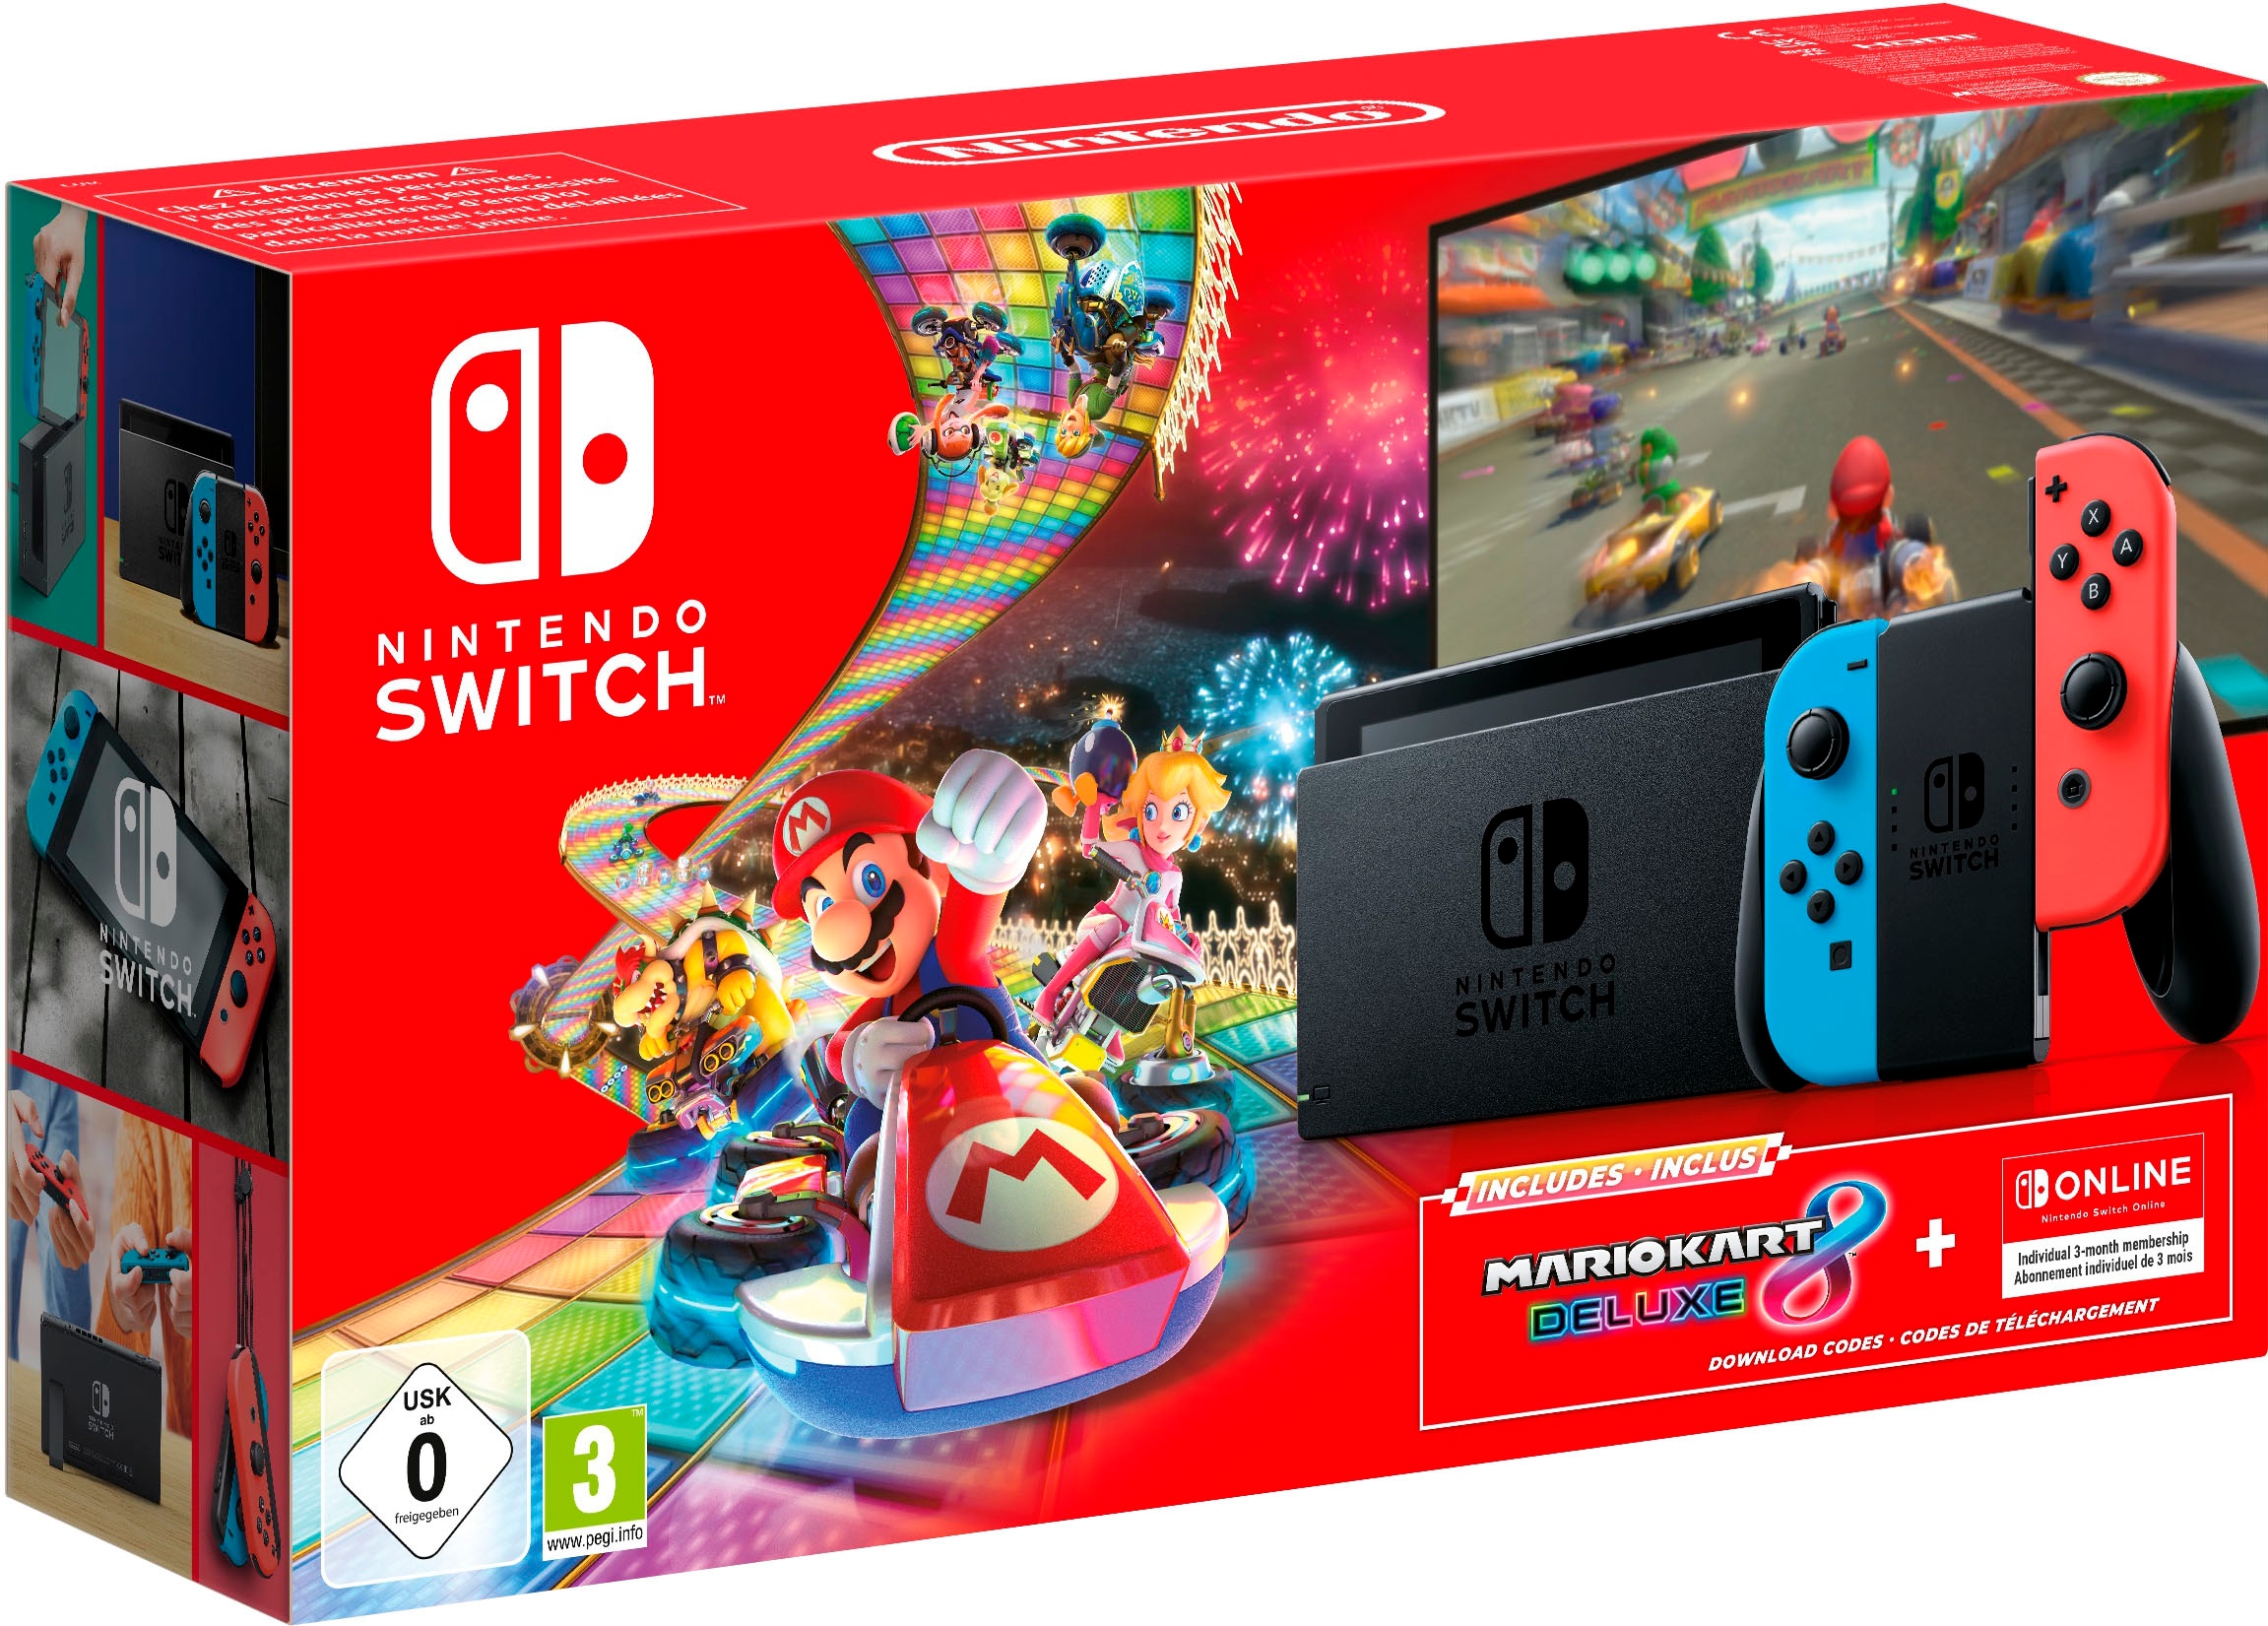 Nintendo Switch Spielekonsole, Mario Kart 8 Deluxe + 3 Monate Switch Online Mitgliedschaft inklusive